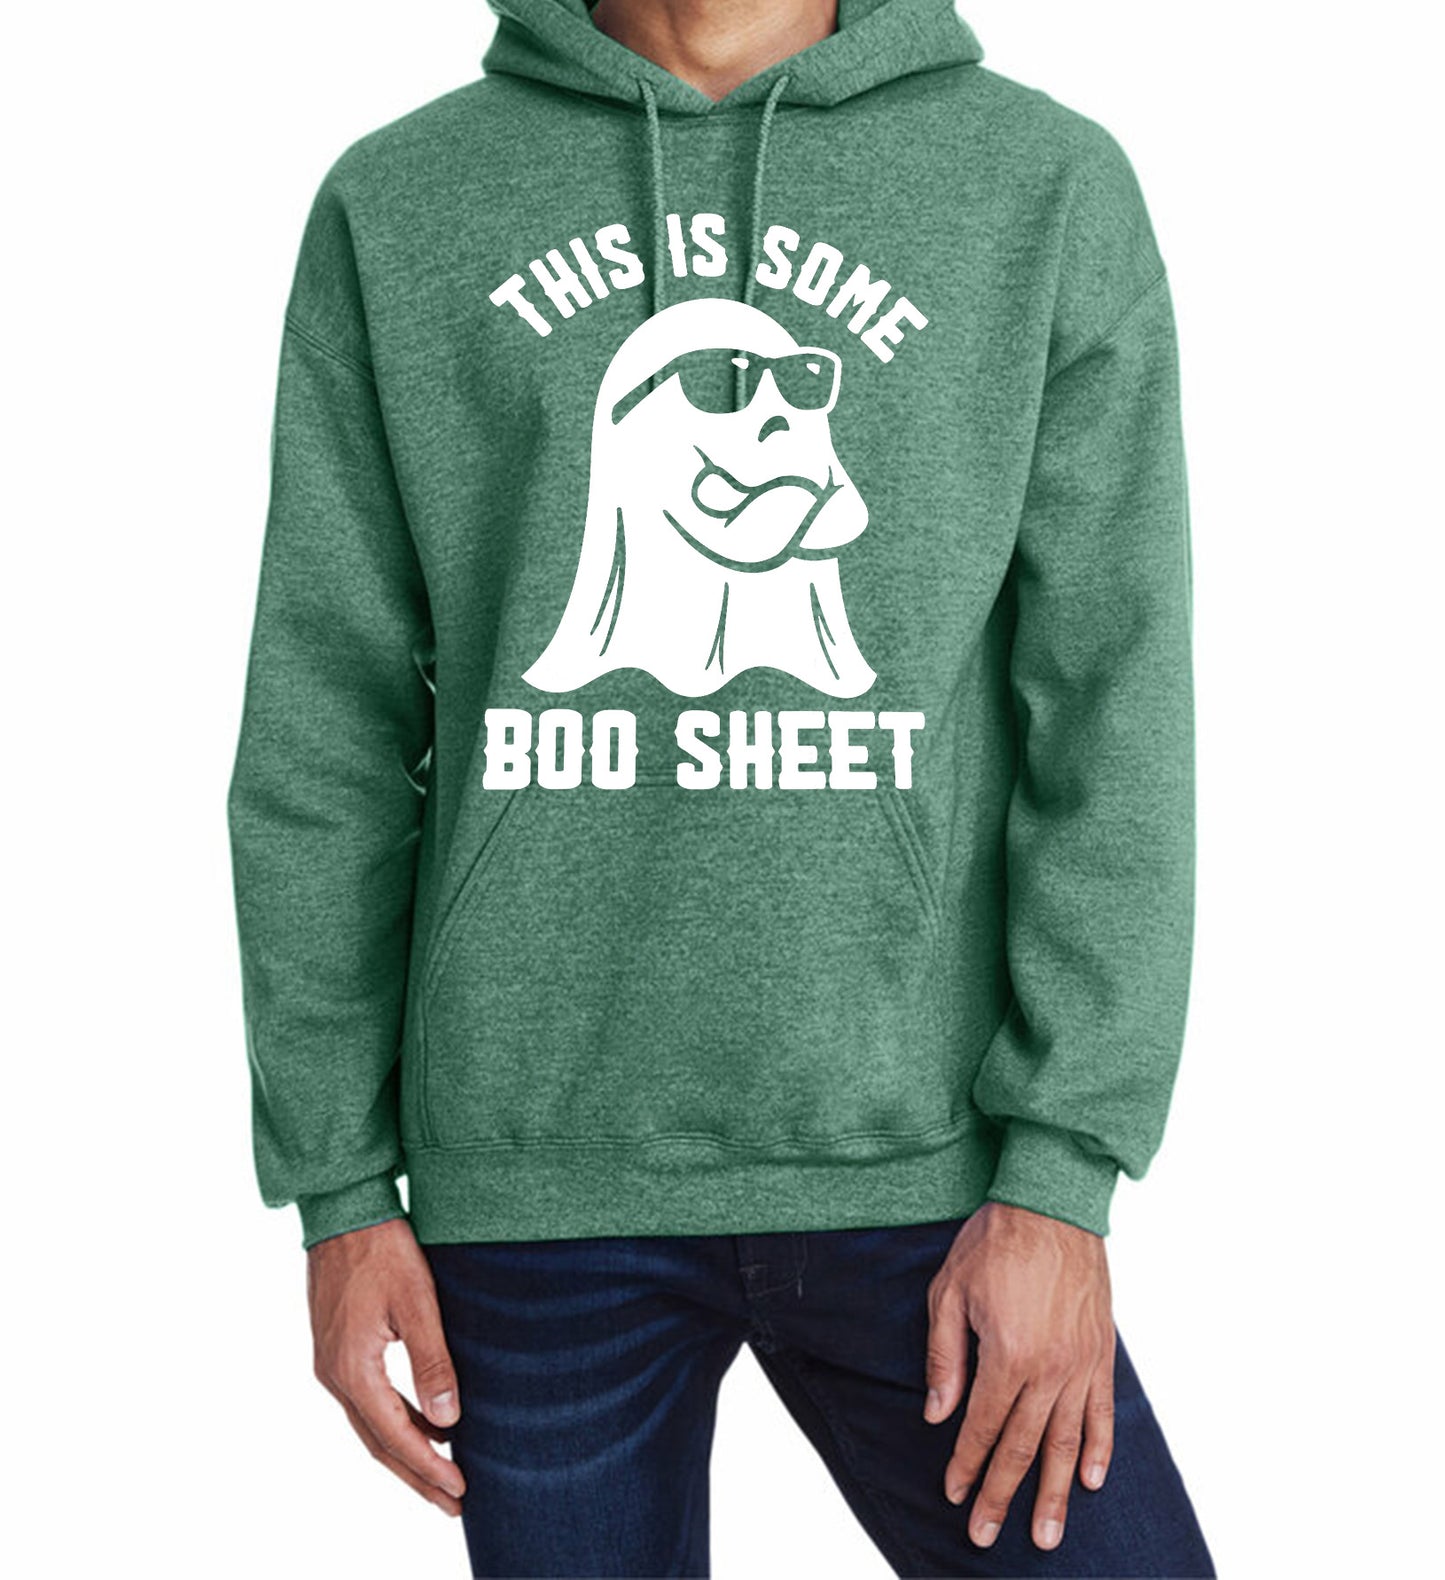 This is some "Boo Sheet" Halloween Holiday sweatshirt